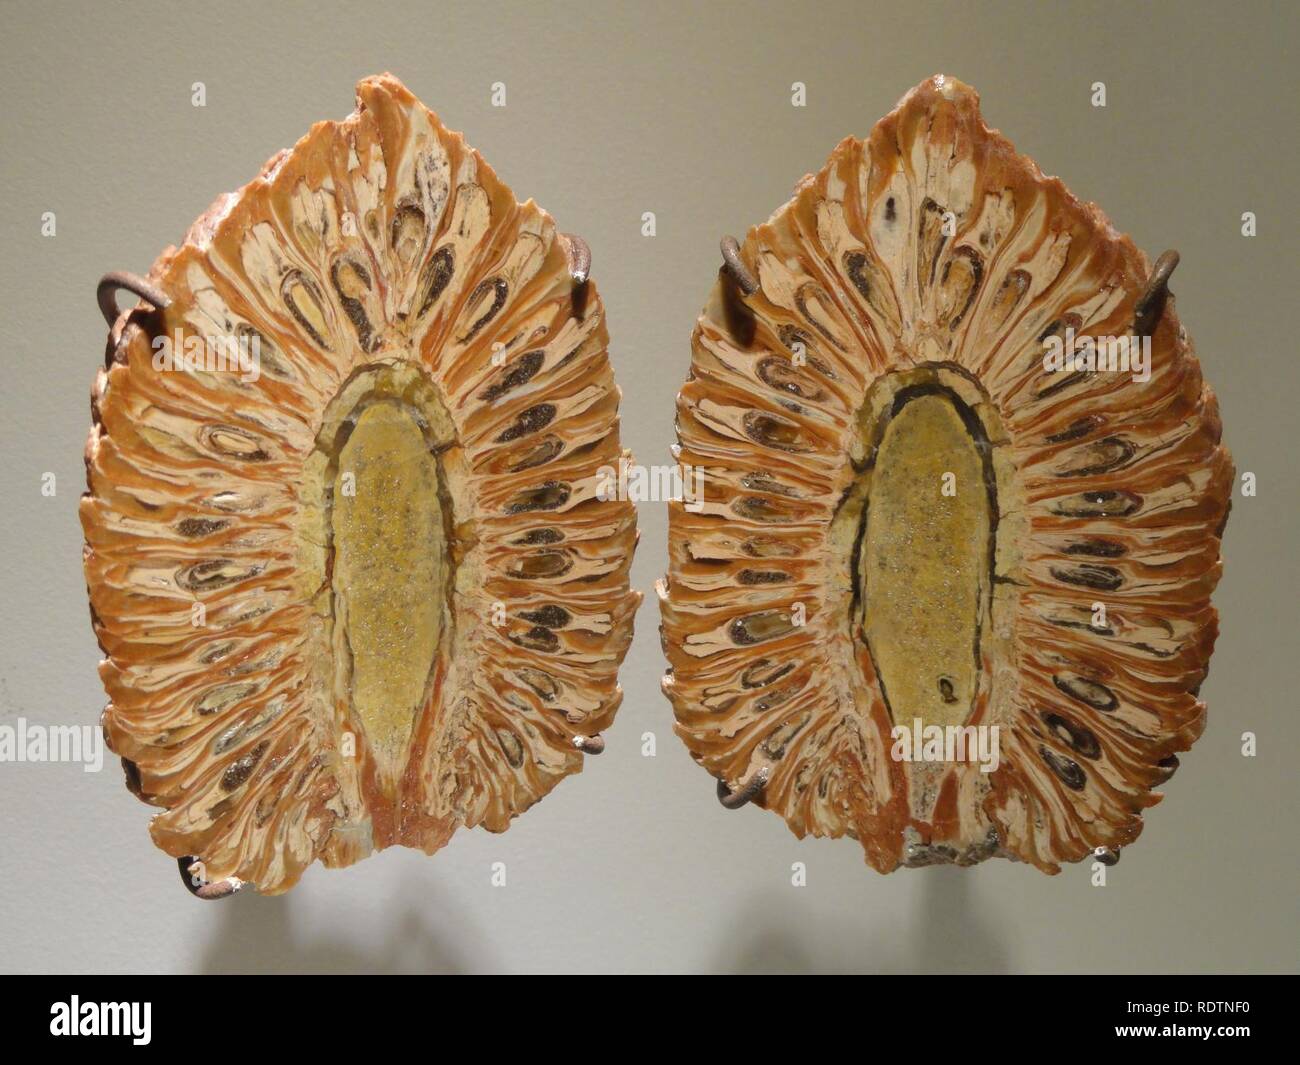 Araucaria mirabilis, pine cone split in half, La Matilde Formation, Patagonia, Argentina - Houston Stock Photo